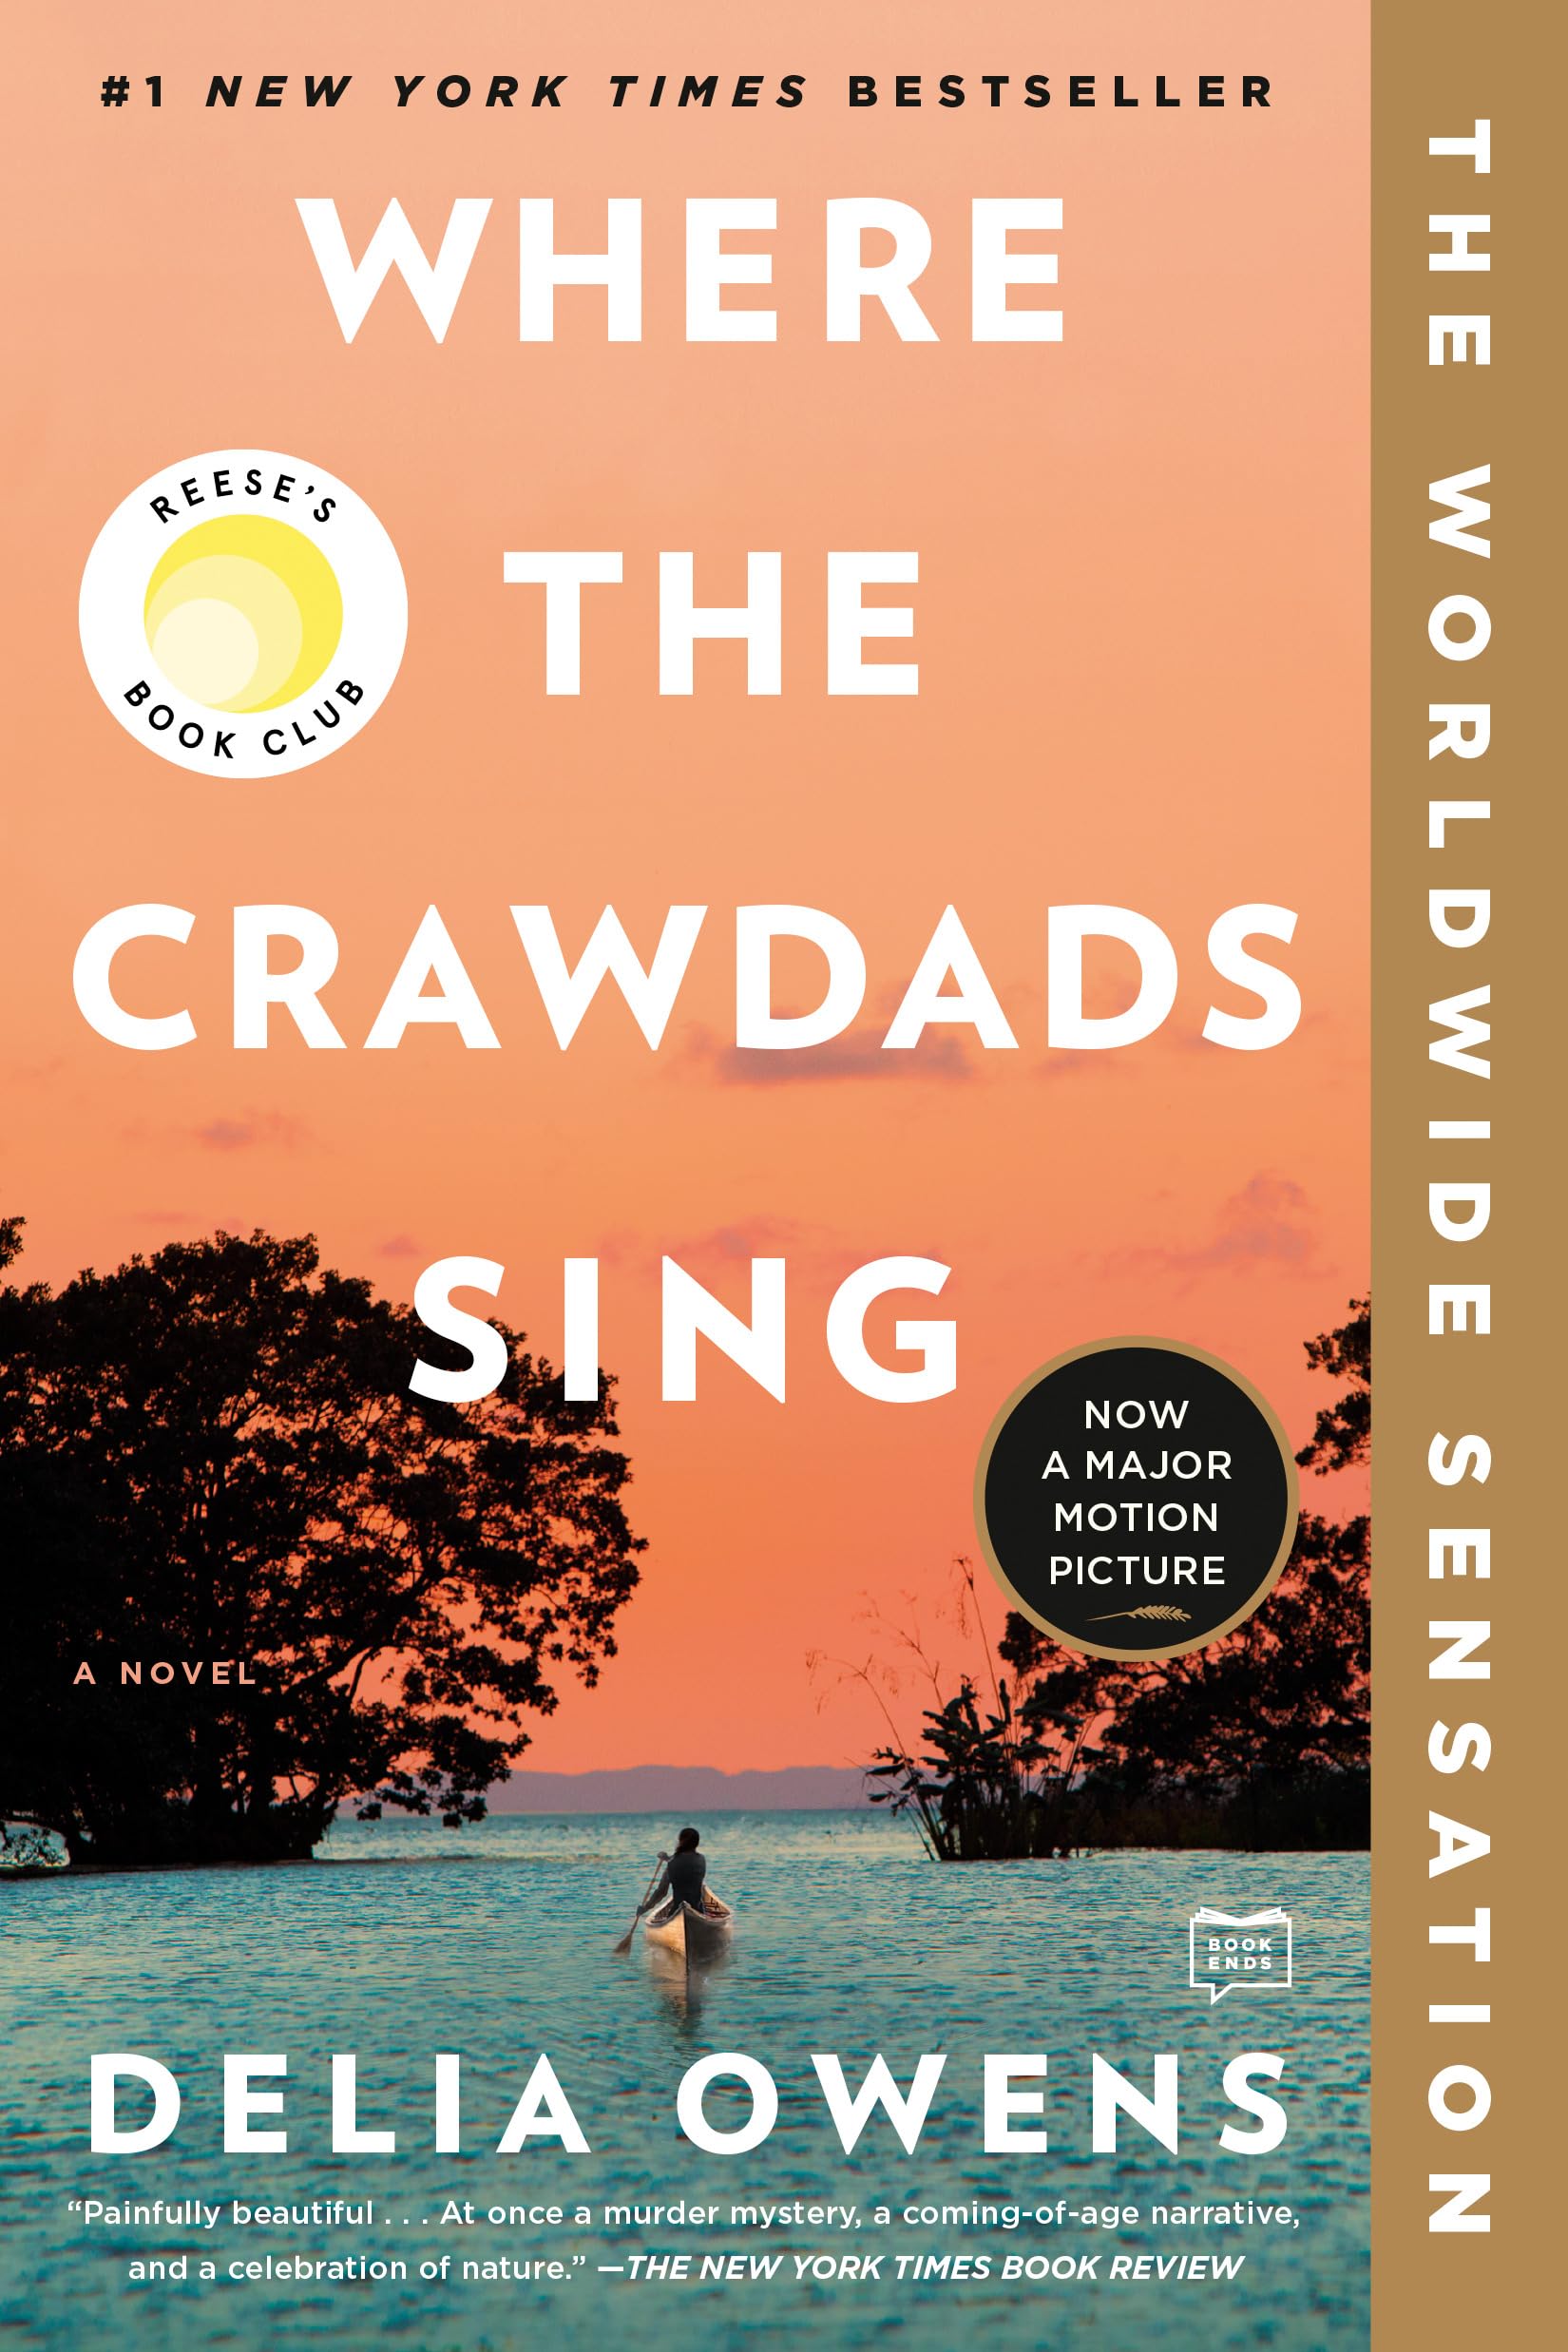 Where the Crawdads Sing (eBook) by Delia Owens $2.99